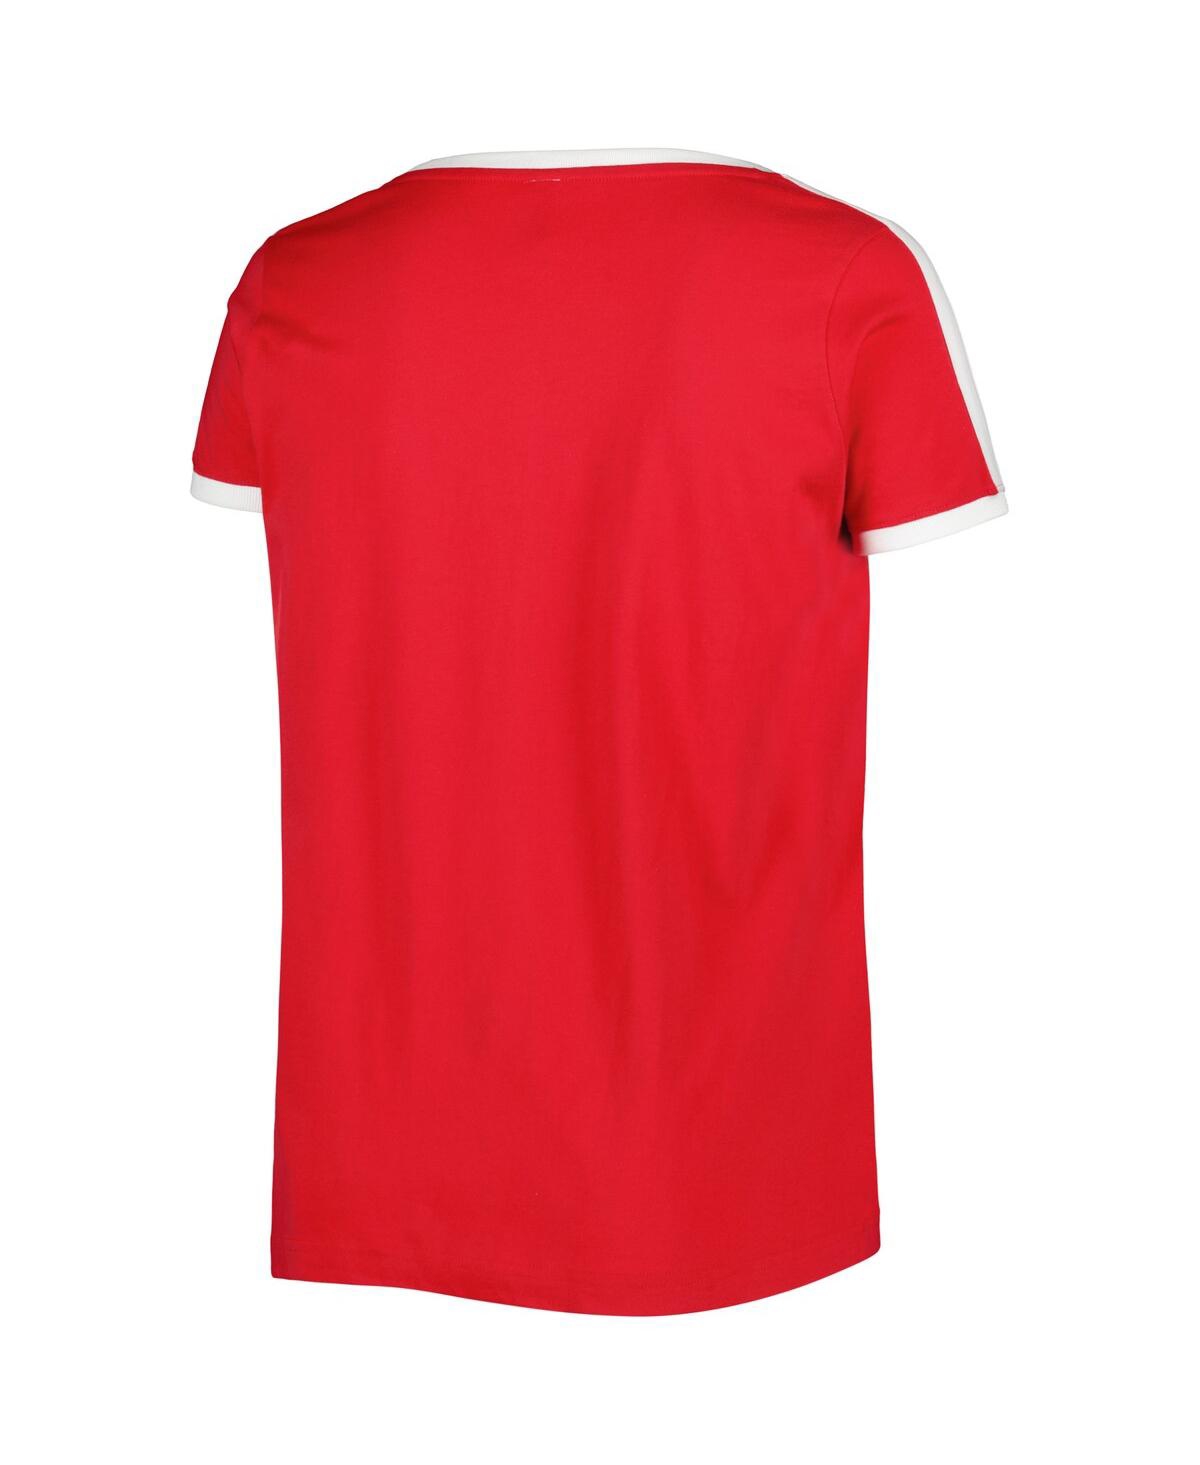 Shop Soft As A Grape Women's  Red Washington Nationals Plus Size V-neck T-shirt